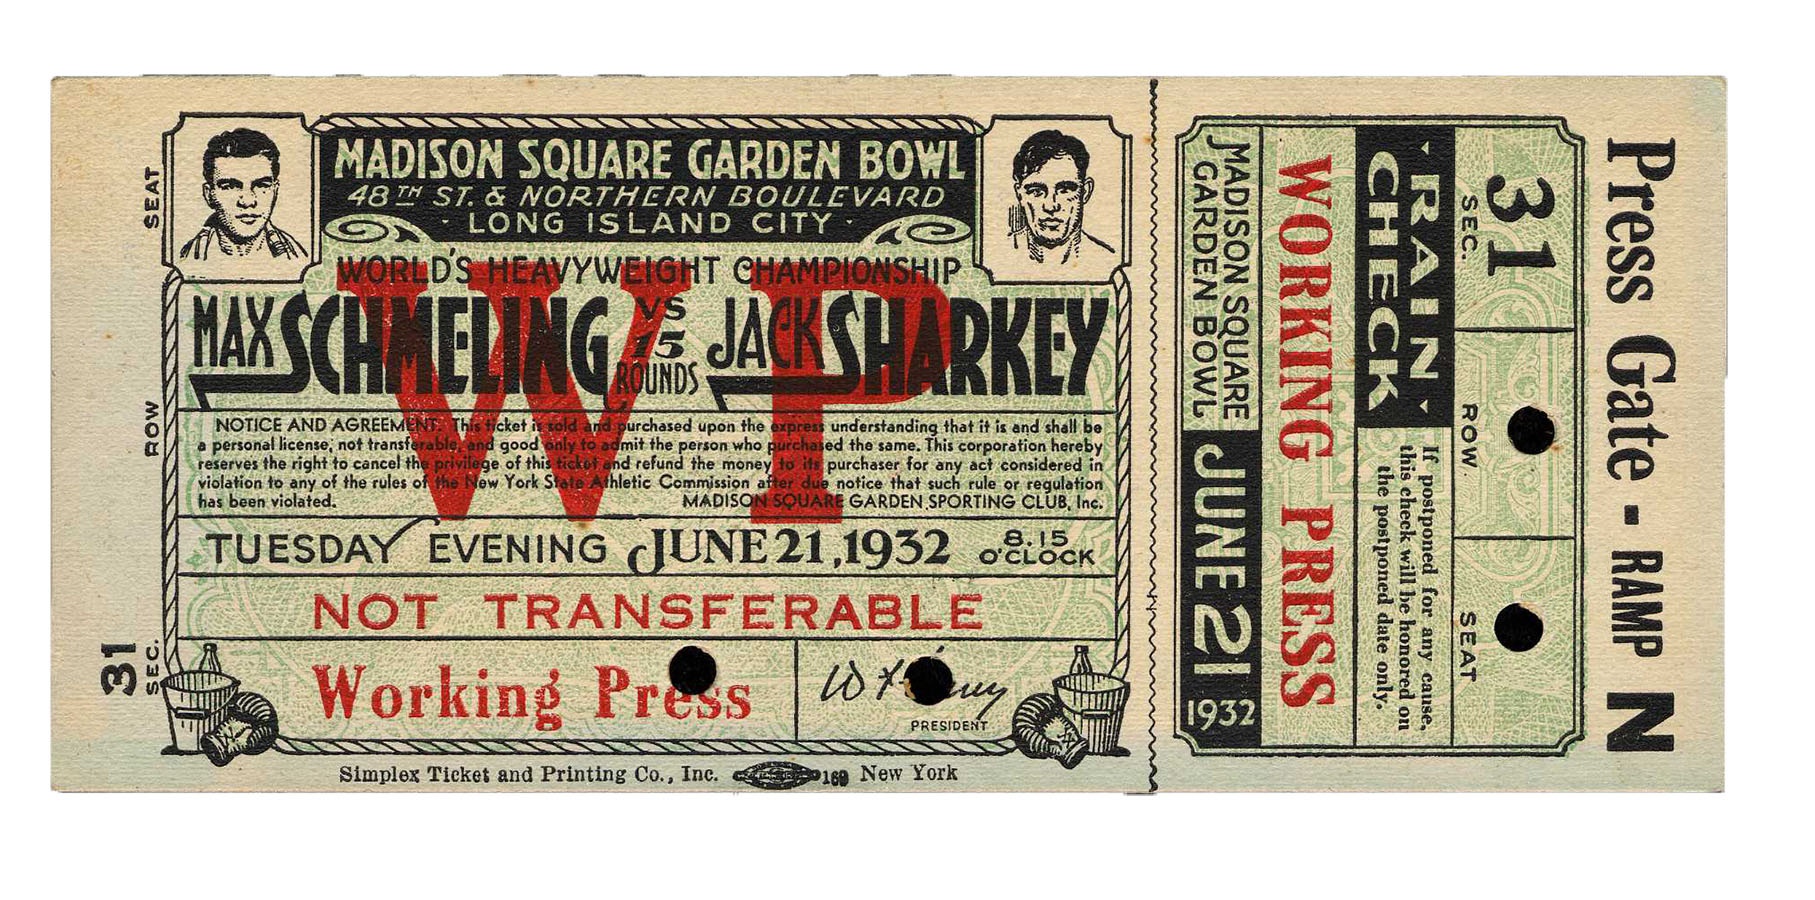 Schmeling-Sharkey Full Ticket (1932)